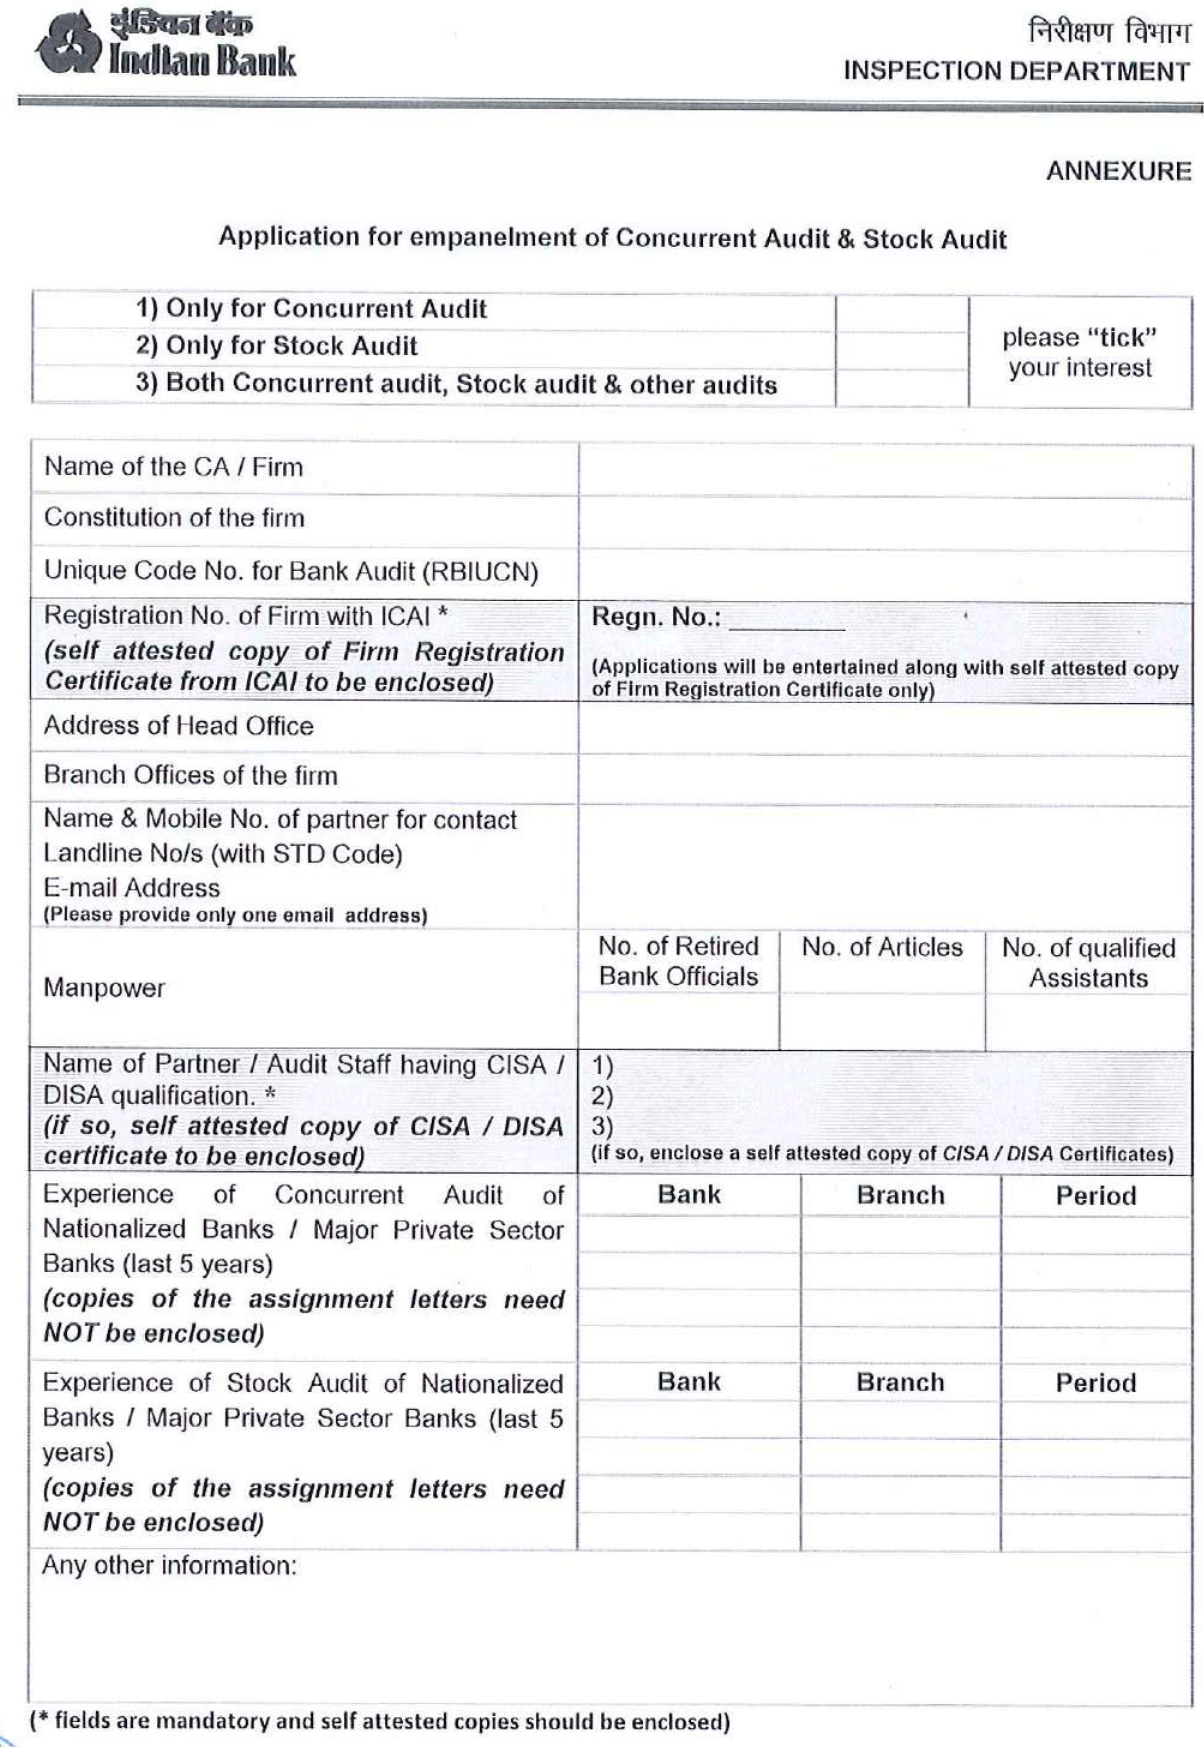 Application for empanelment of Concurrent Audit & Stock Audit- Indian Bank